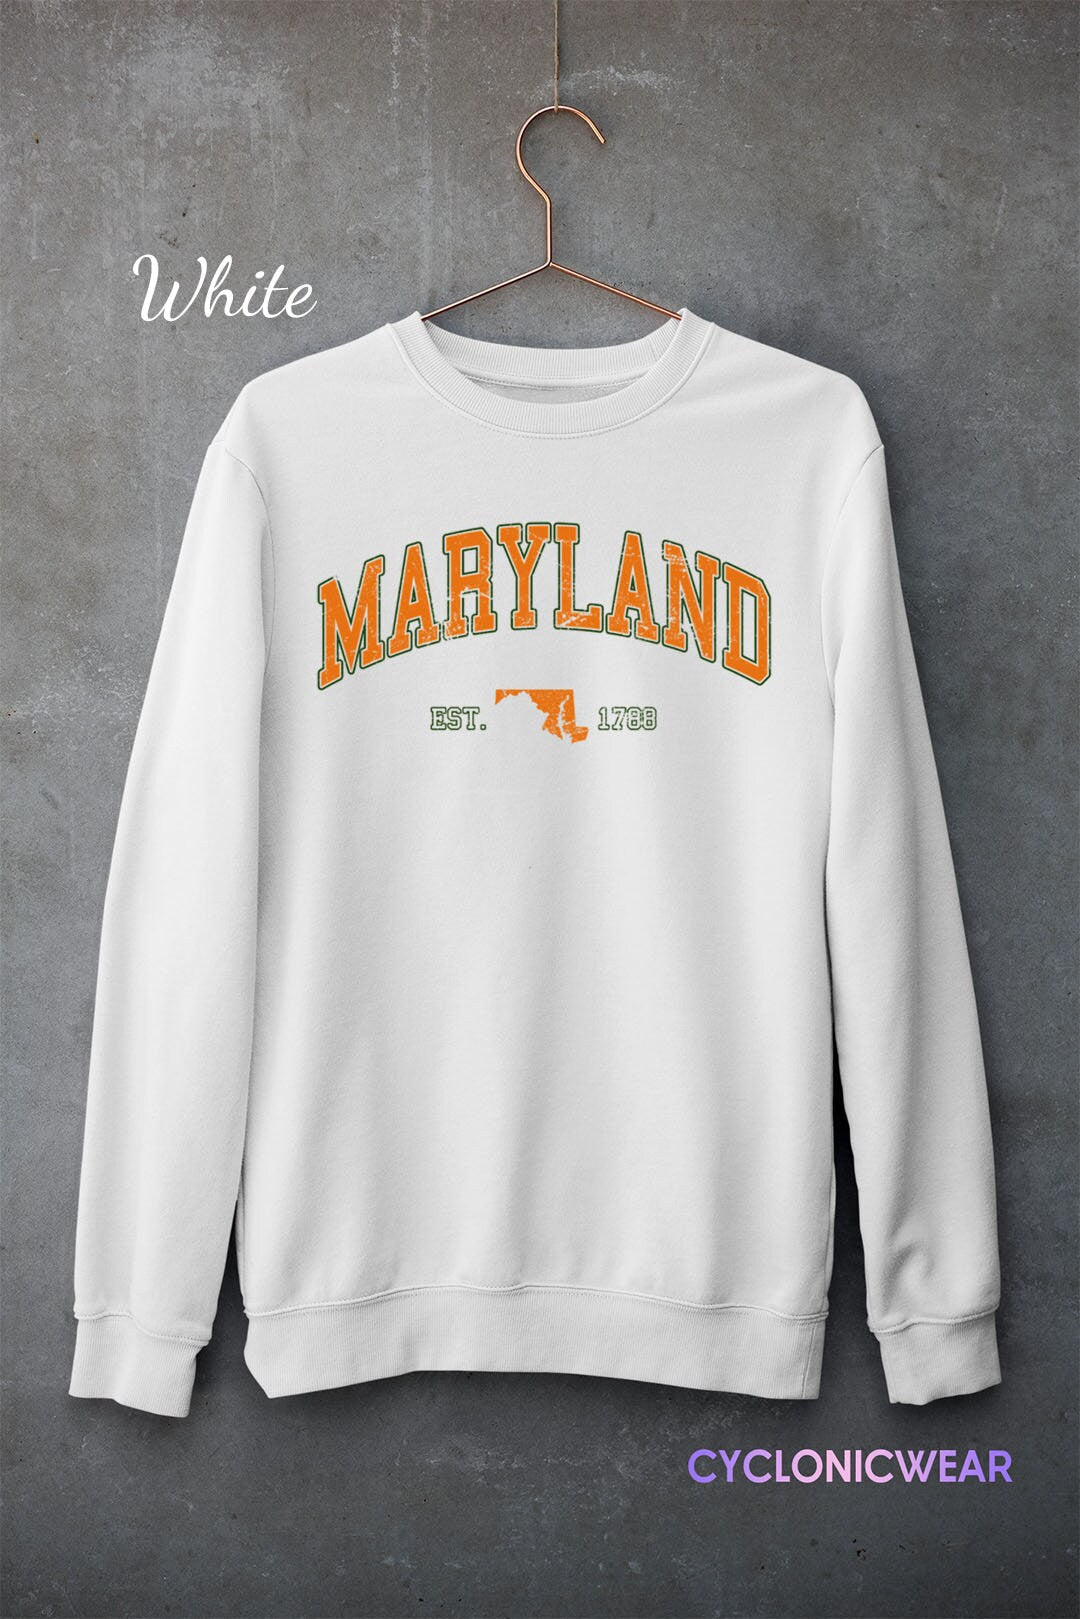 Vintage Maryland Sweatshirt, Maryland College Sweater, University Student Sweater, USA Travel Gift, Sports Fan, Maryland Unisex Sweater